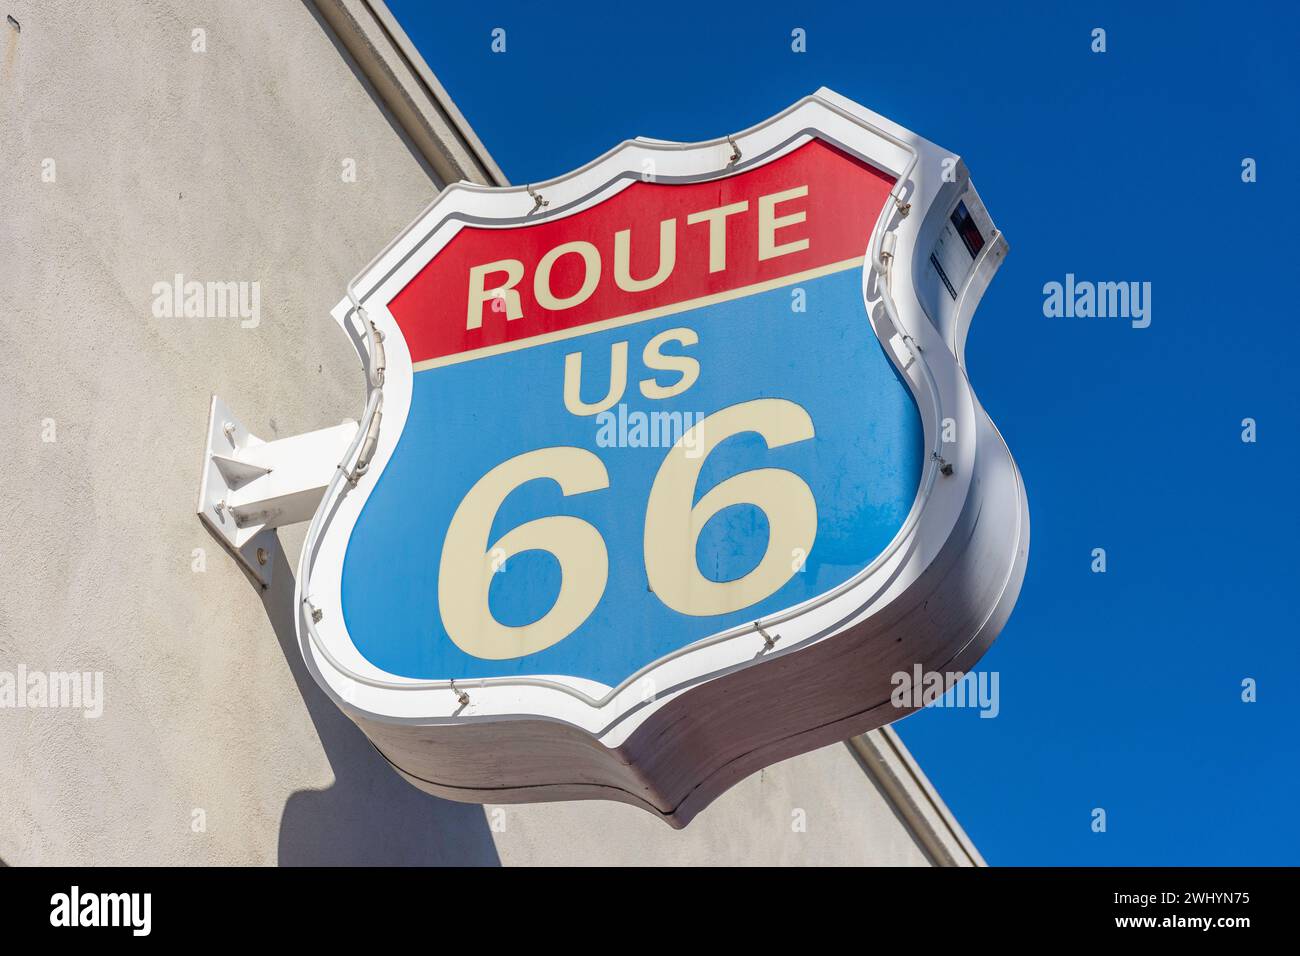 Route 66 sign, Fisherman's Wharf, Fisherman's Wharf District, San Francisco, California, United States Stock Photo